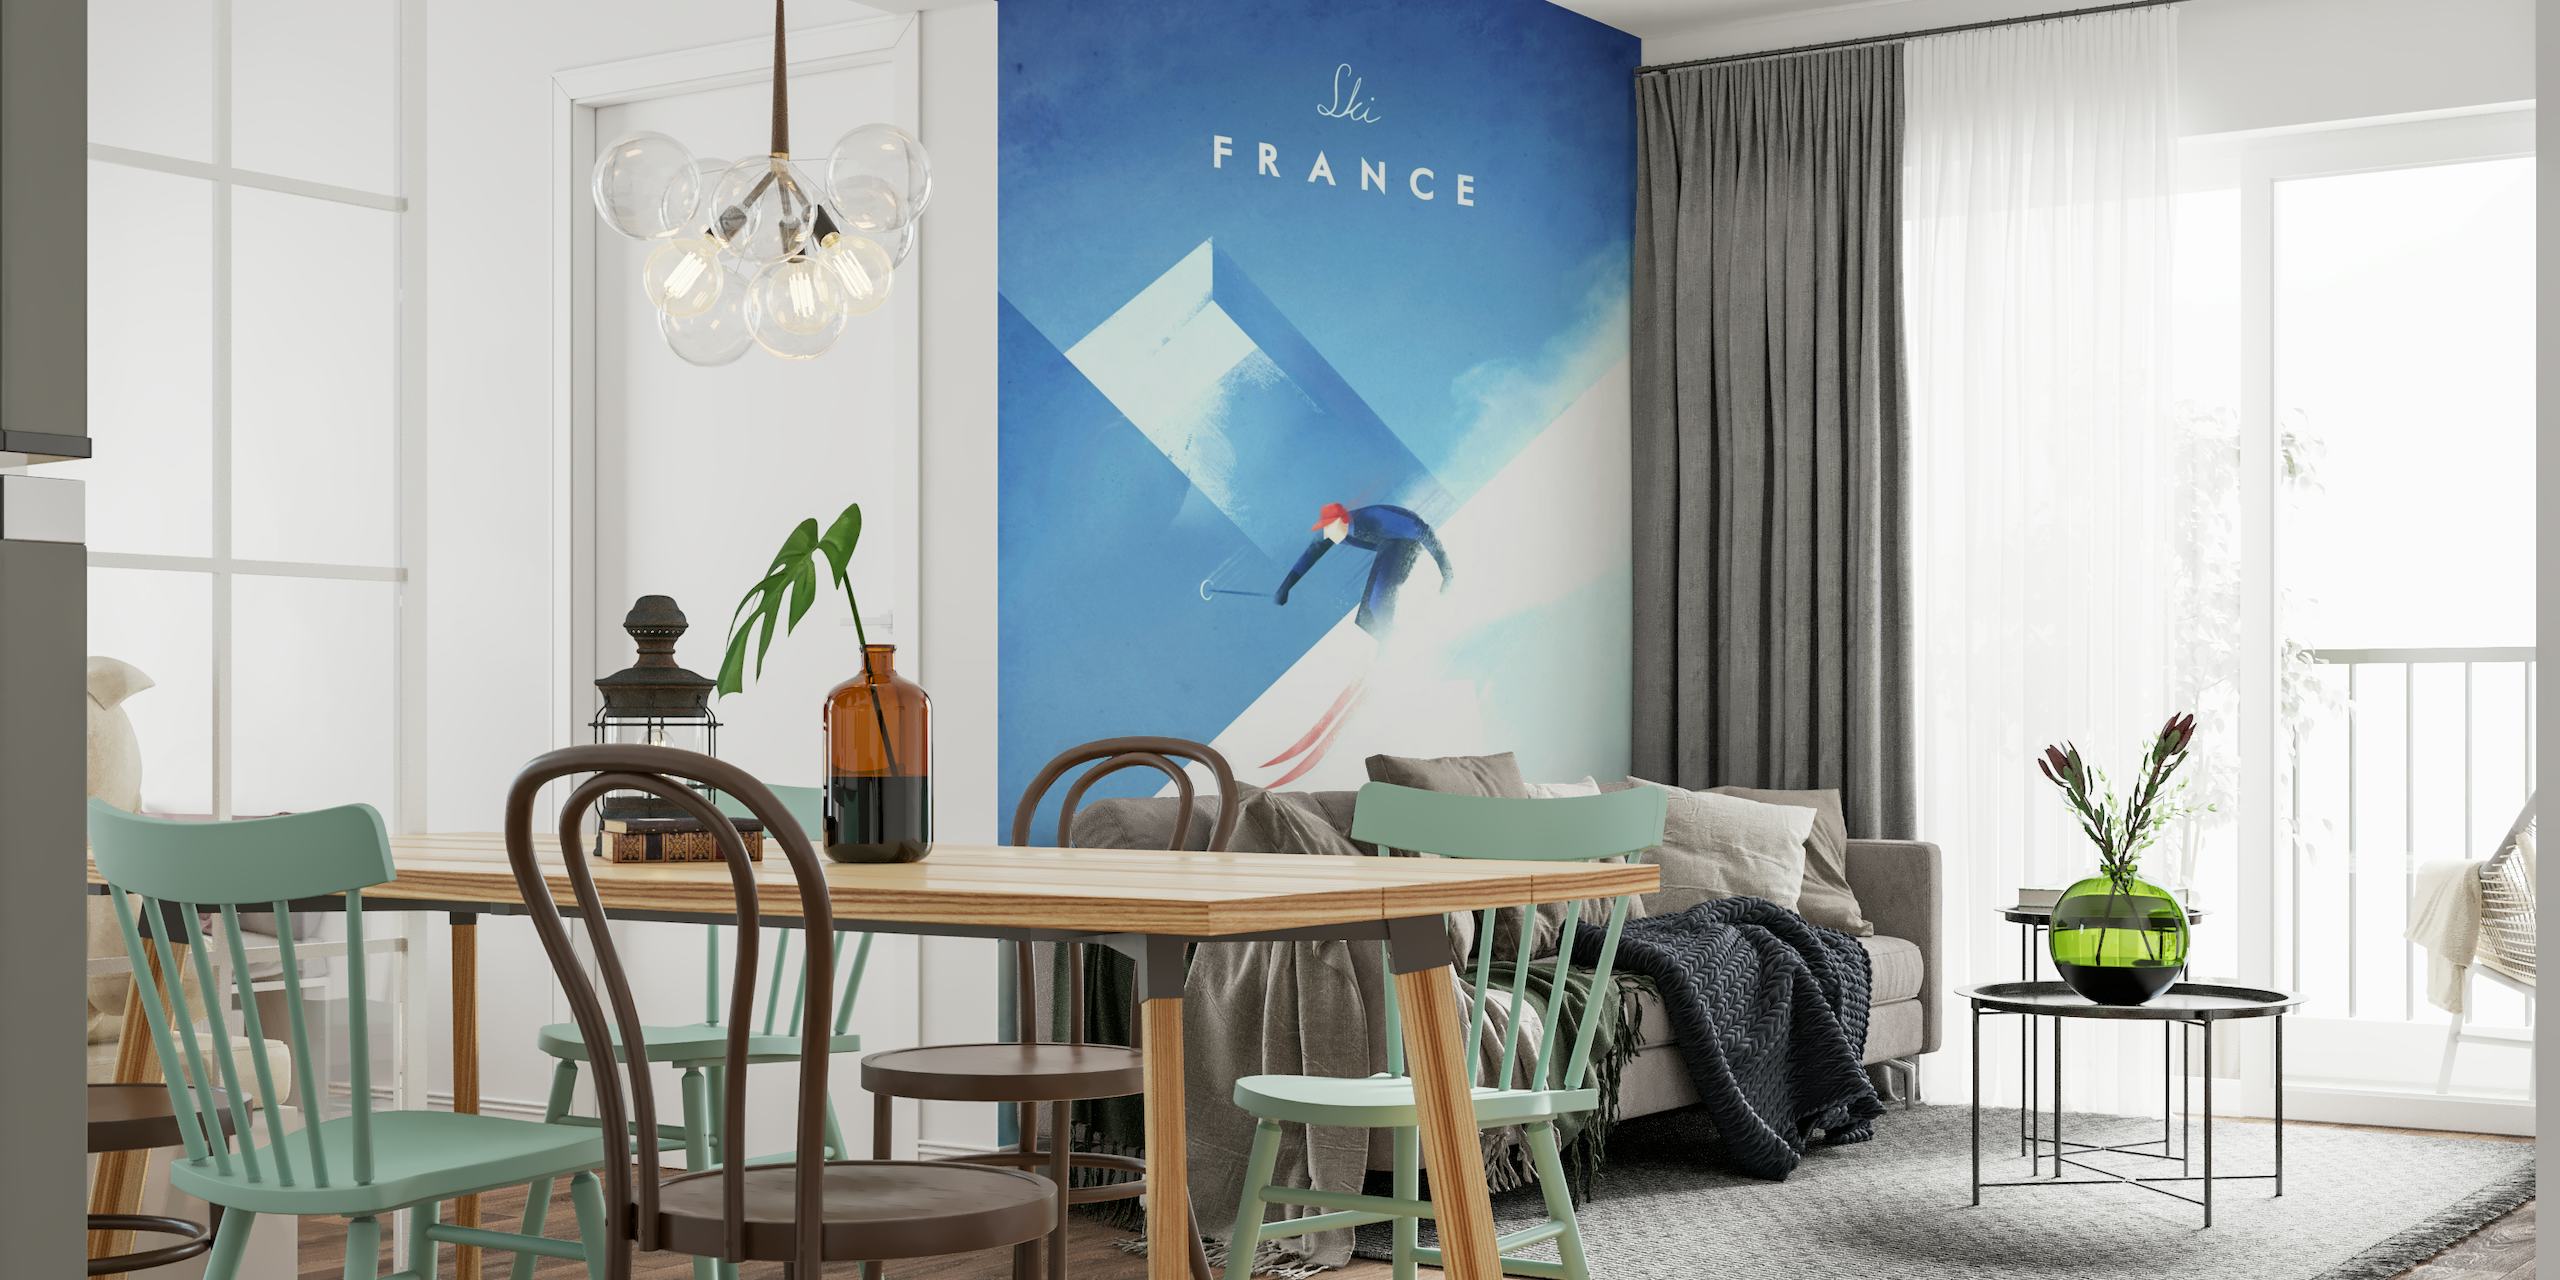 Ski France Travel Poster papiers peint